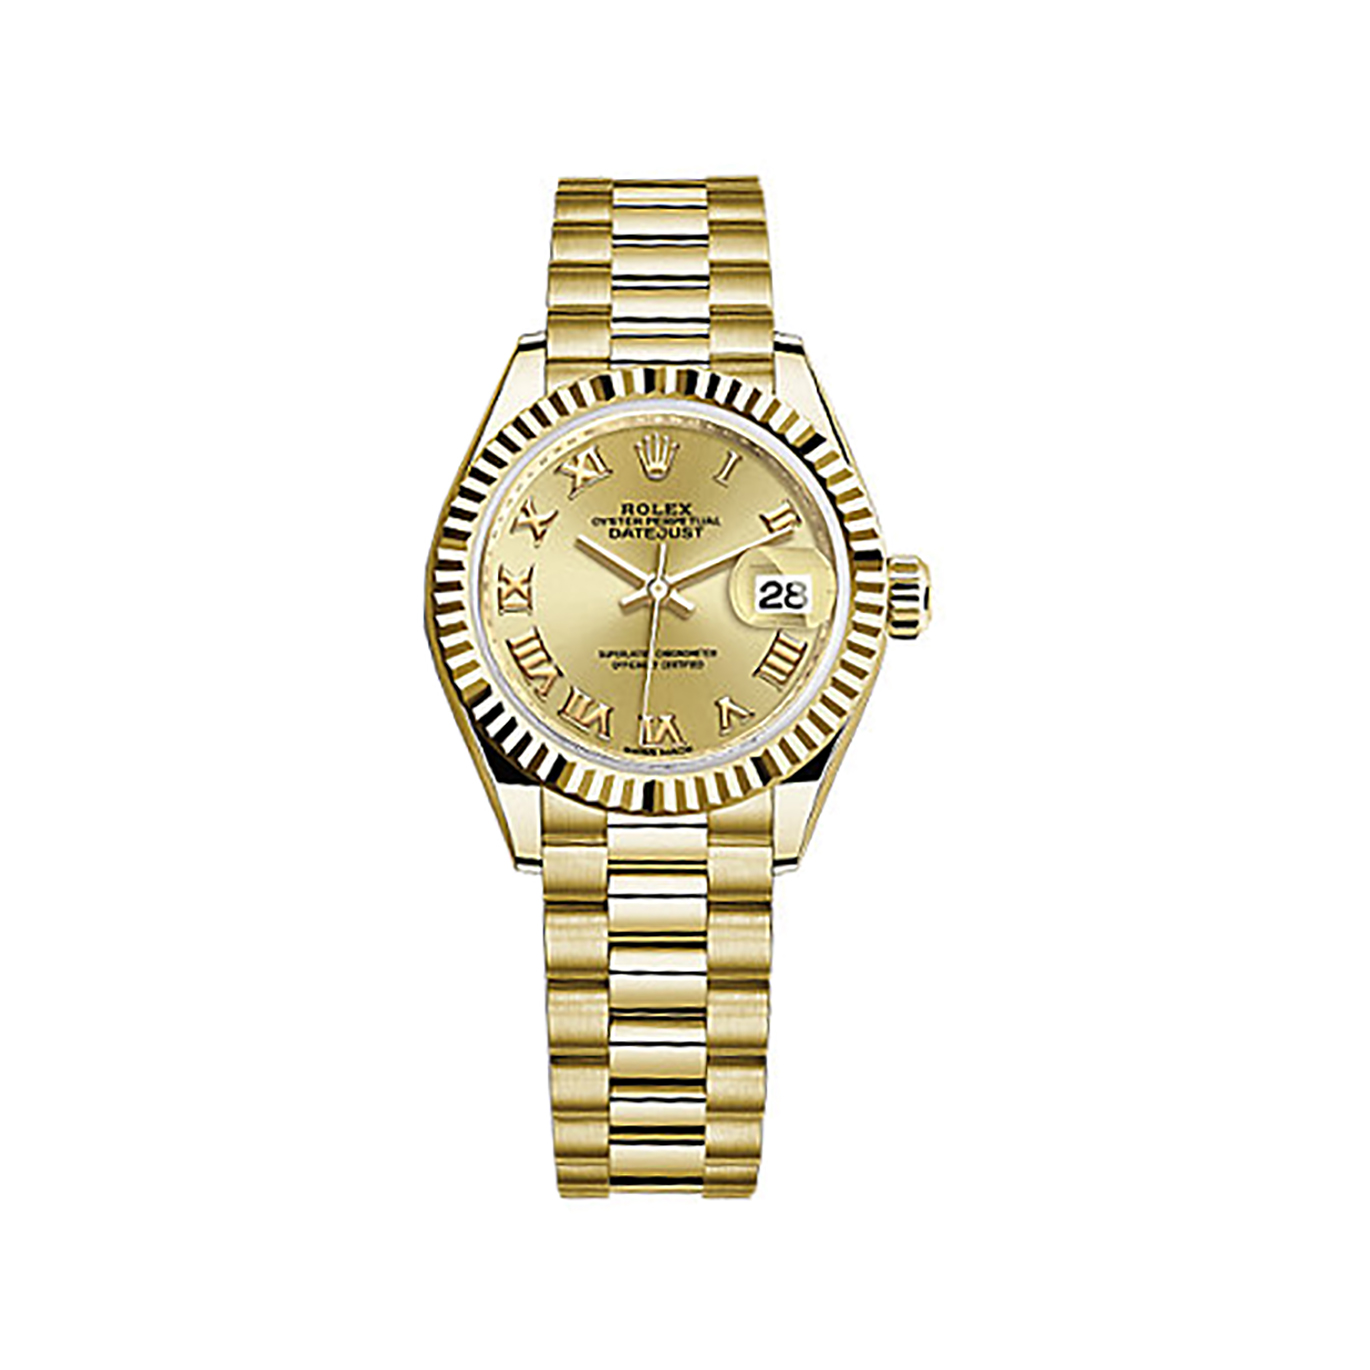 Lady-Datejust 28 279178 Gold Watch (Champagne)